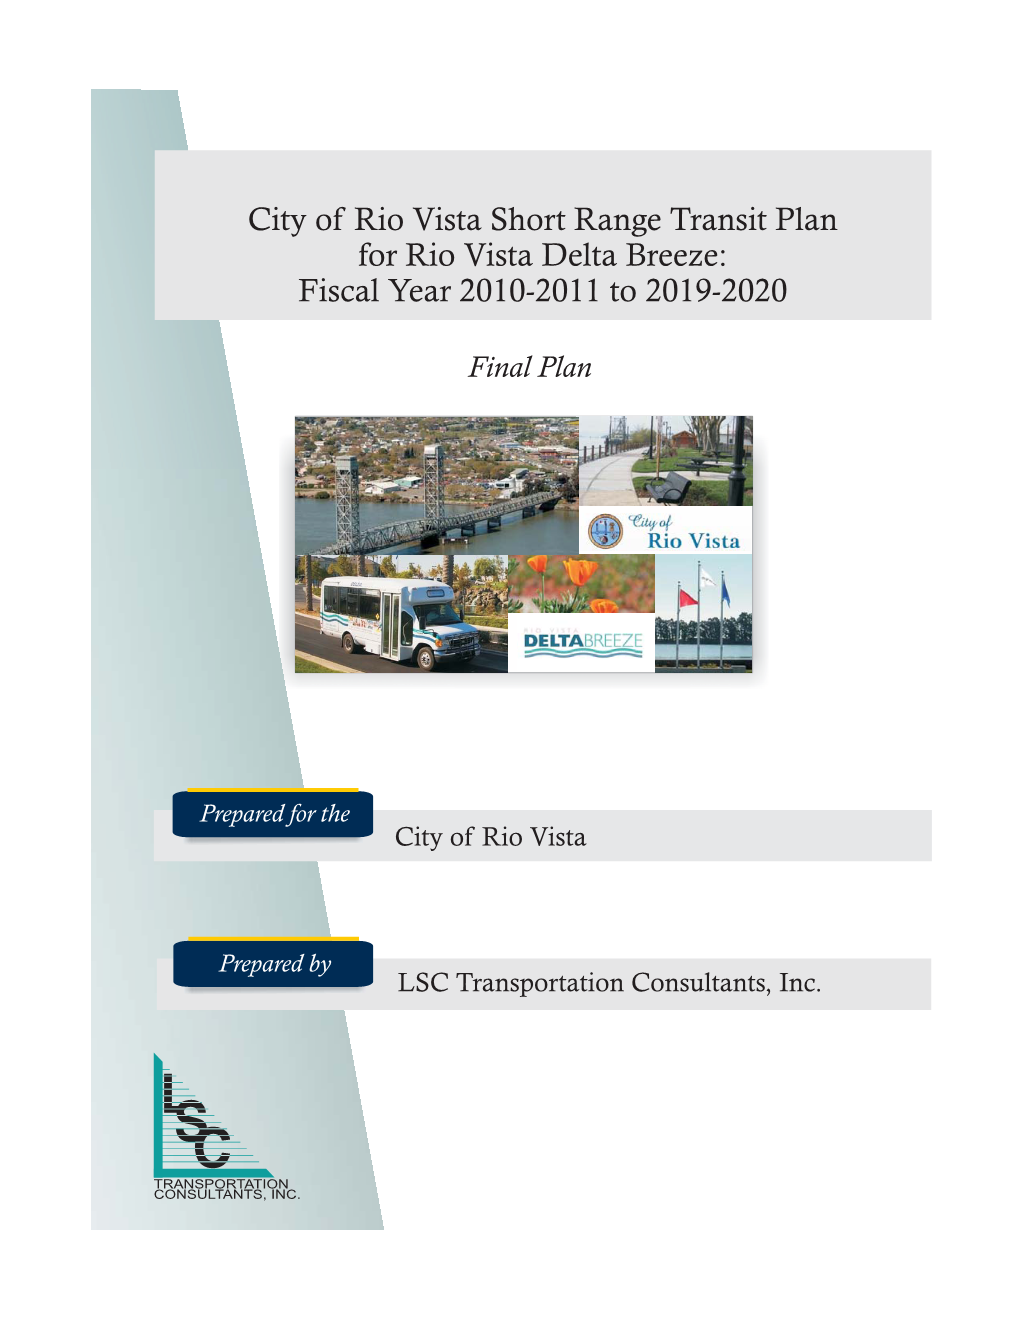 City of Rio Vista Short Range Transit Plan for Rio Vista Delta Breeze: Fiscal Year 2010-2011 to 2019-2020